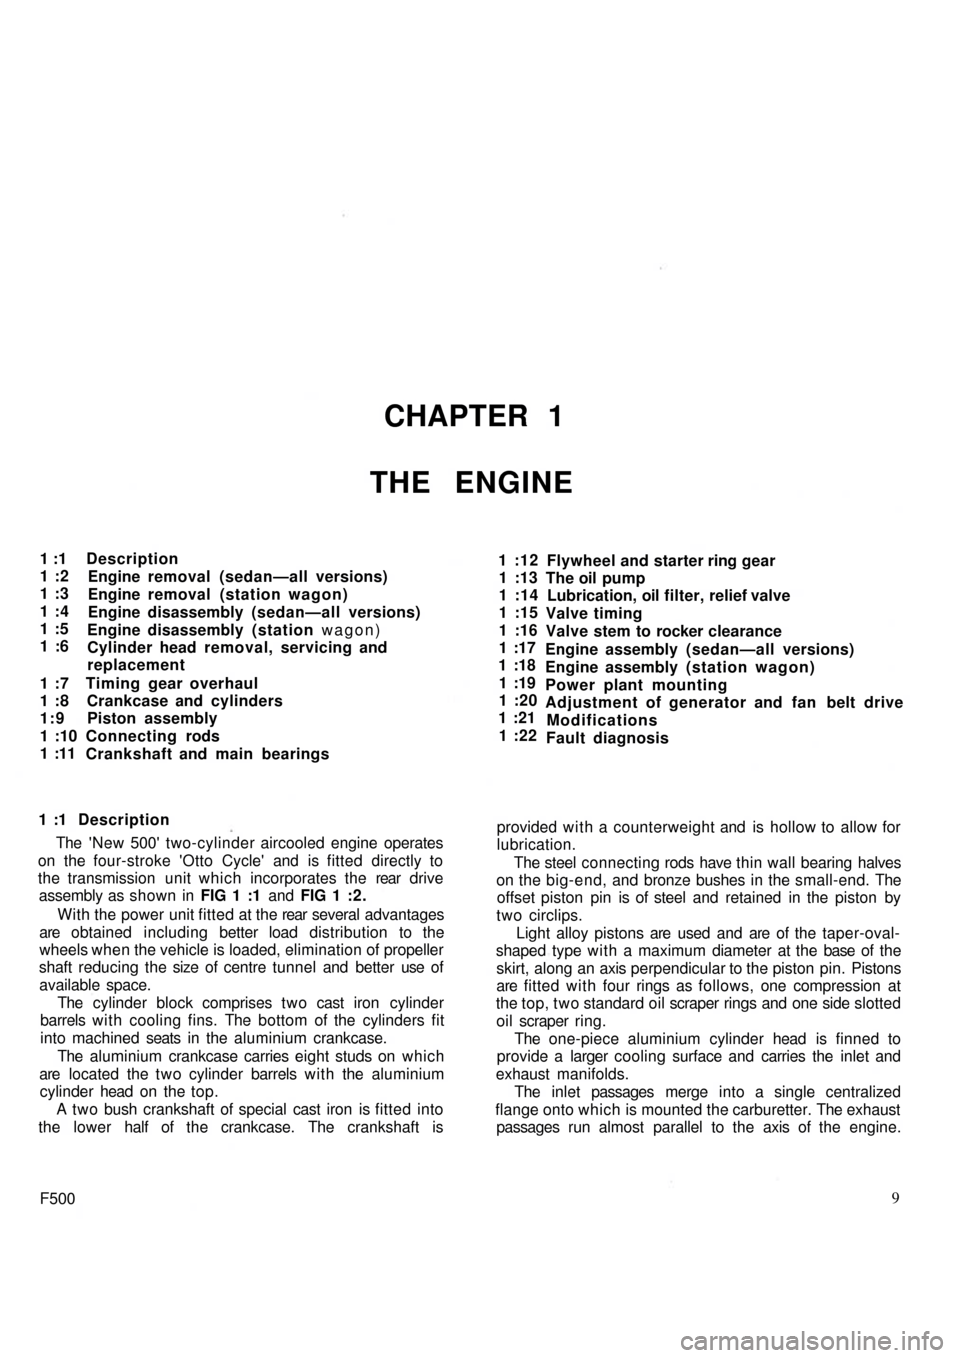 FIAT 500 1958 1.G Workshop Manual CHAPTER 1
THE ENGINE
1 :1
1 :2
1 :3
1 :4
1 :5
1 :6
1 :7
1 :8
1:9
1 :10
1 :11Description
Engine removal (sedan—all versions)
Engine removal (station wagon)
Engine disassembly (sedan—all versions)
E